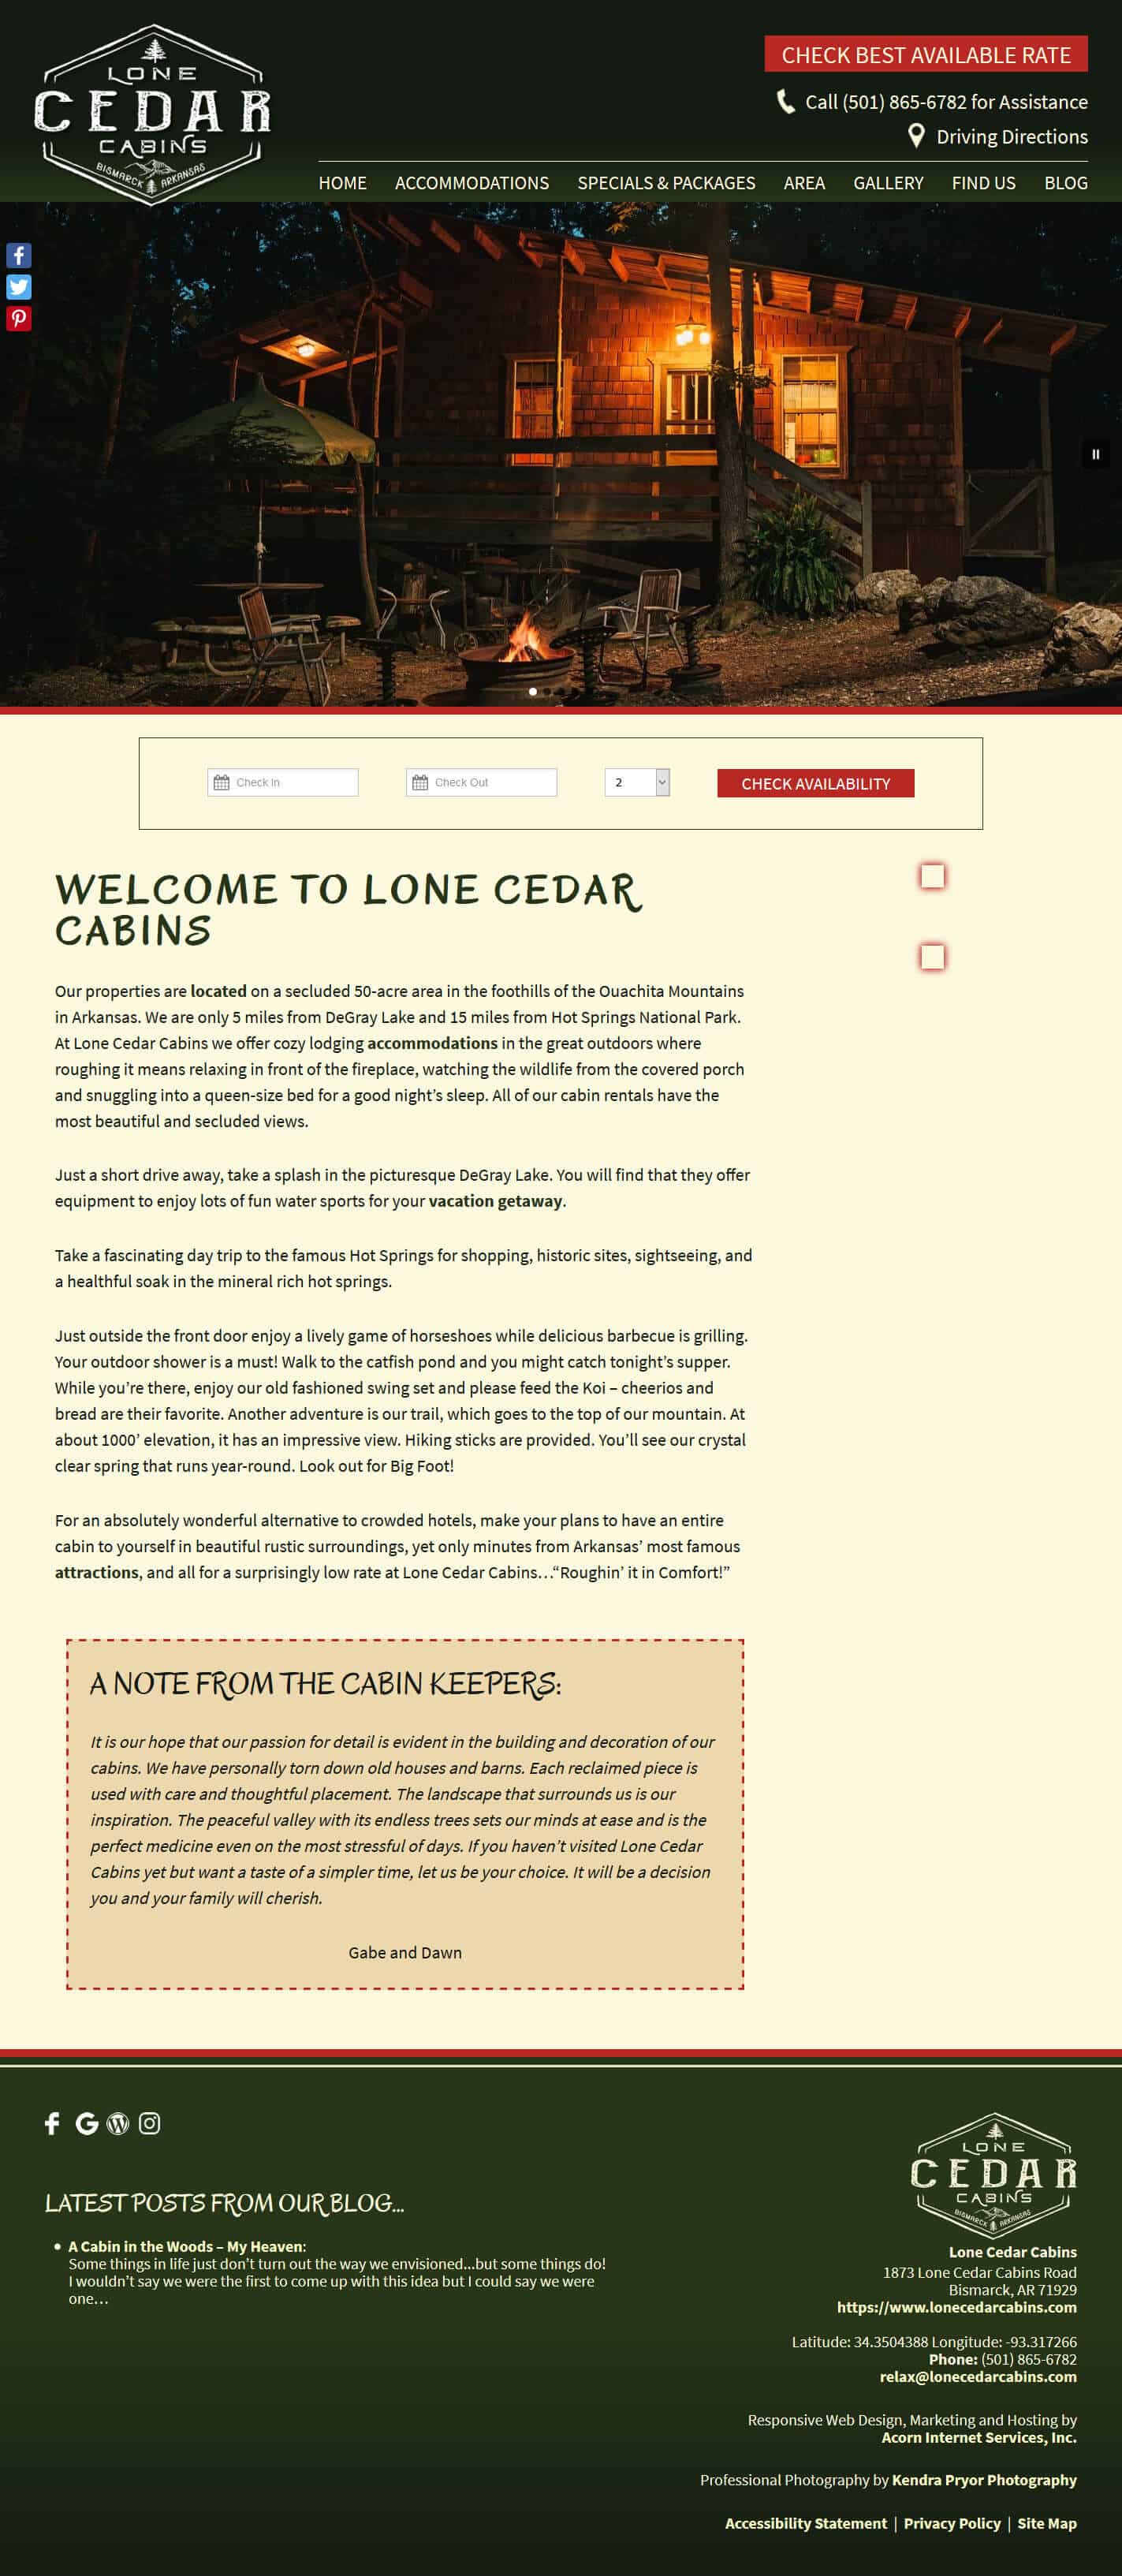 Lone Cedar Cabins' website home page 